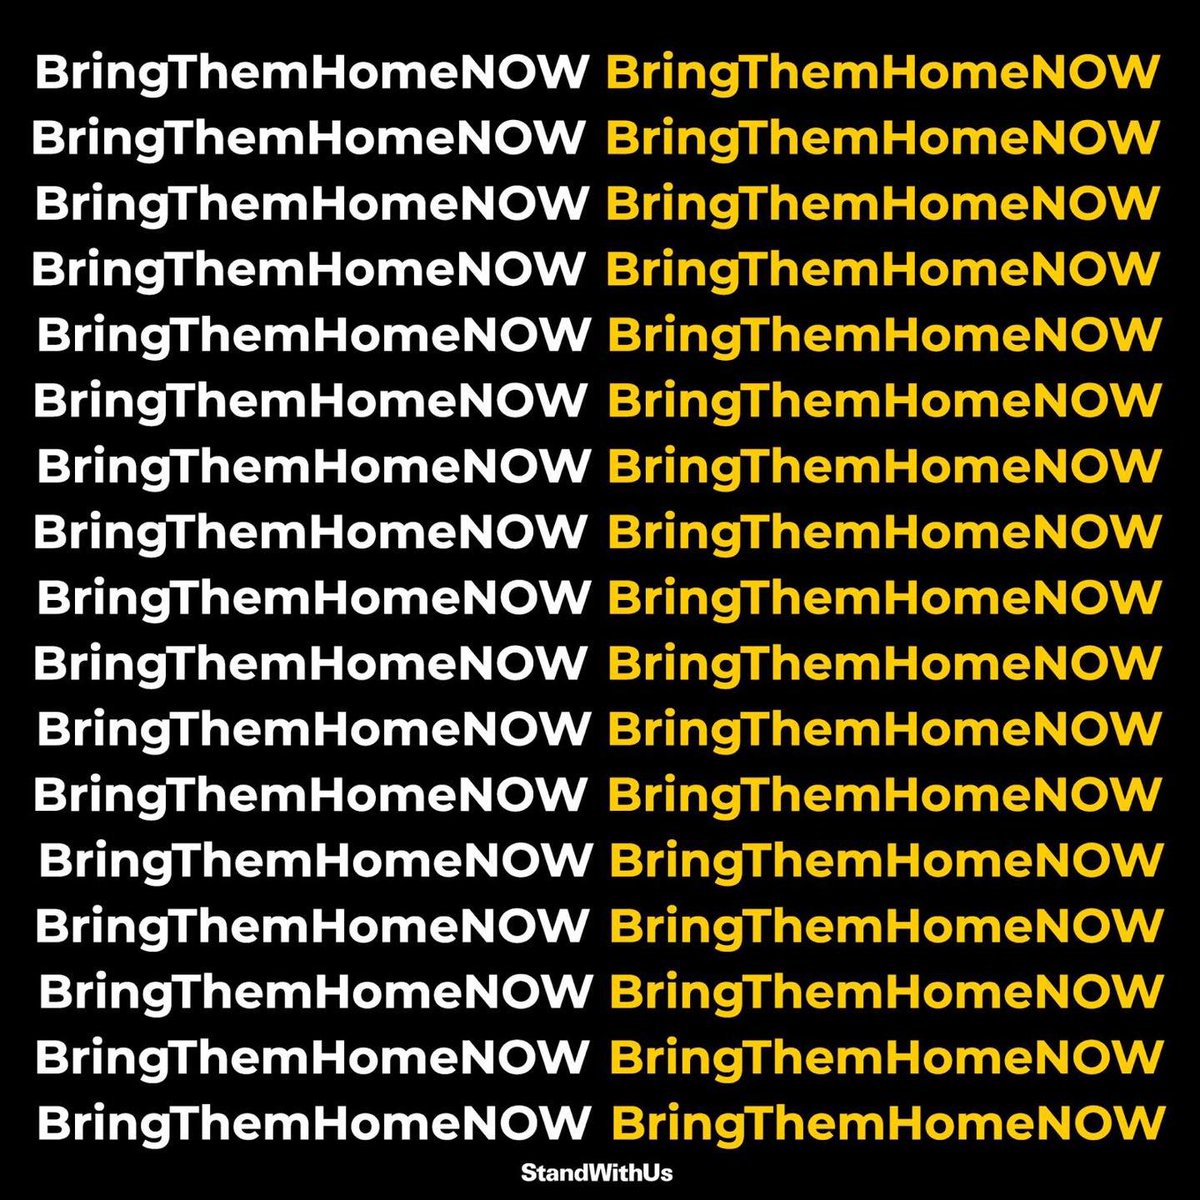 #BringThemHomeNOW